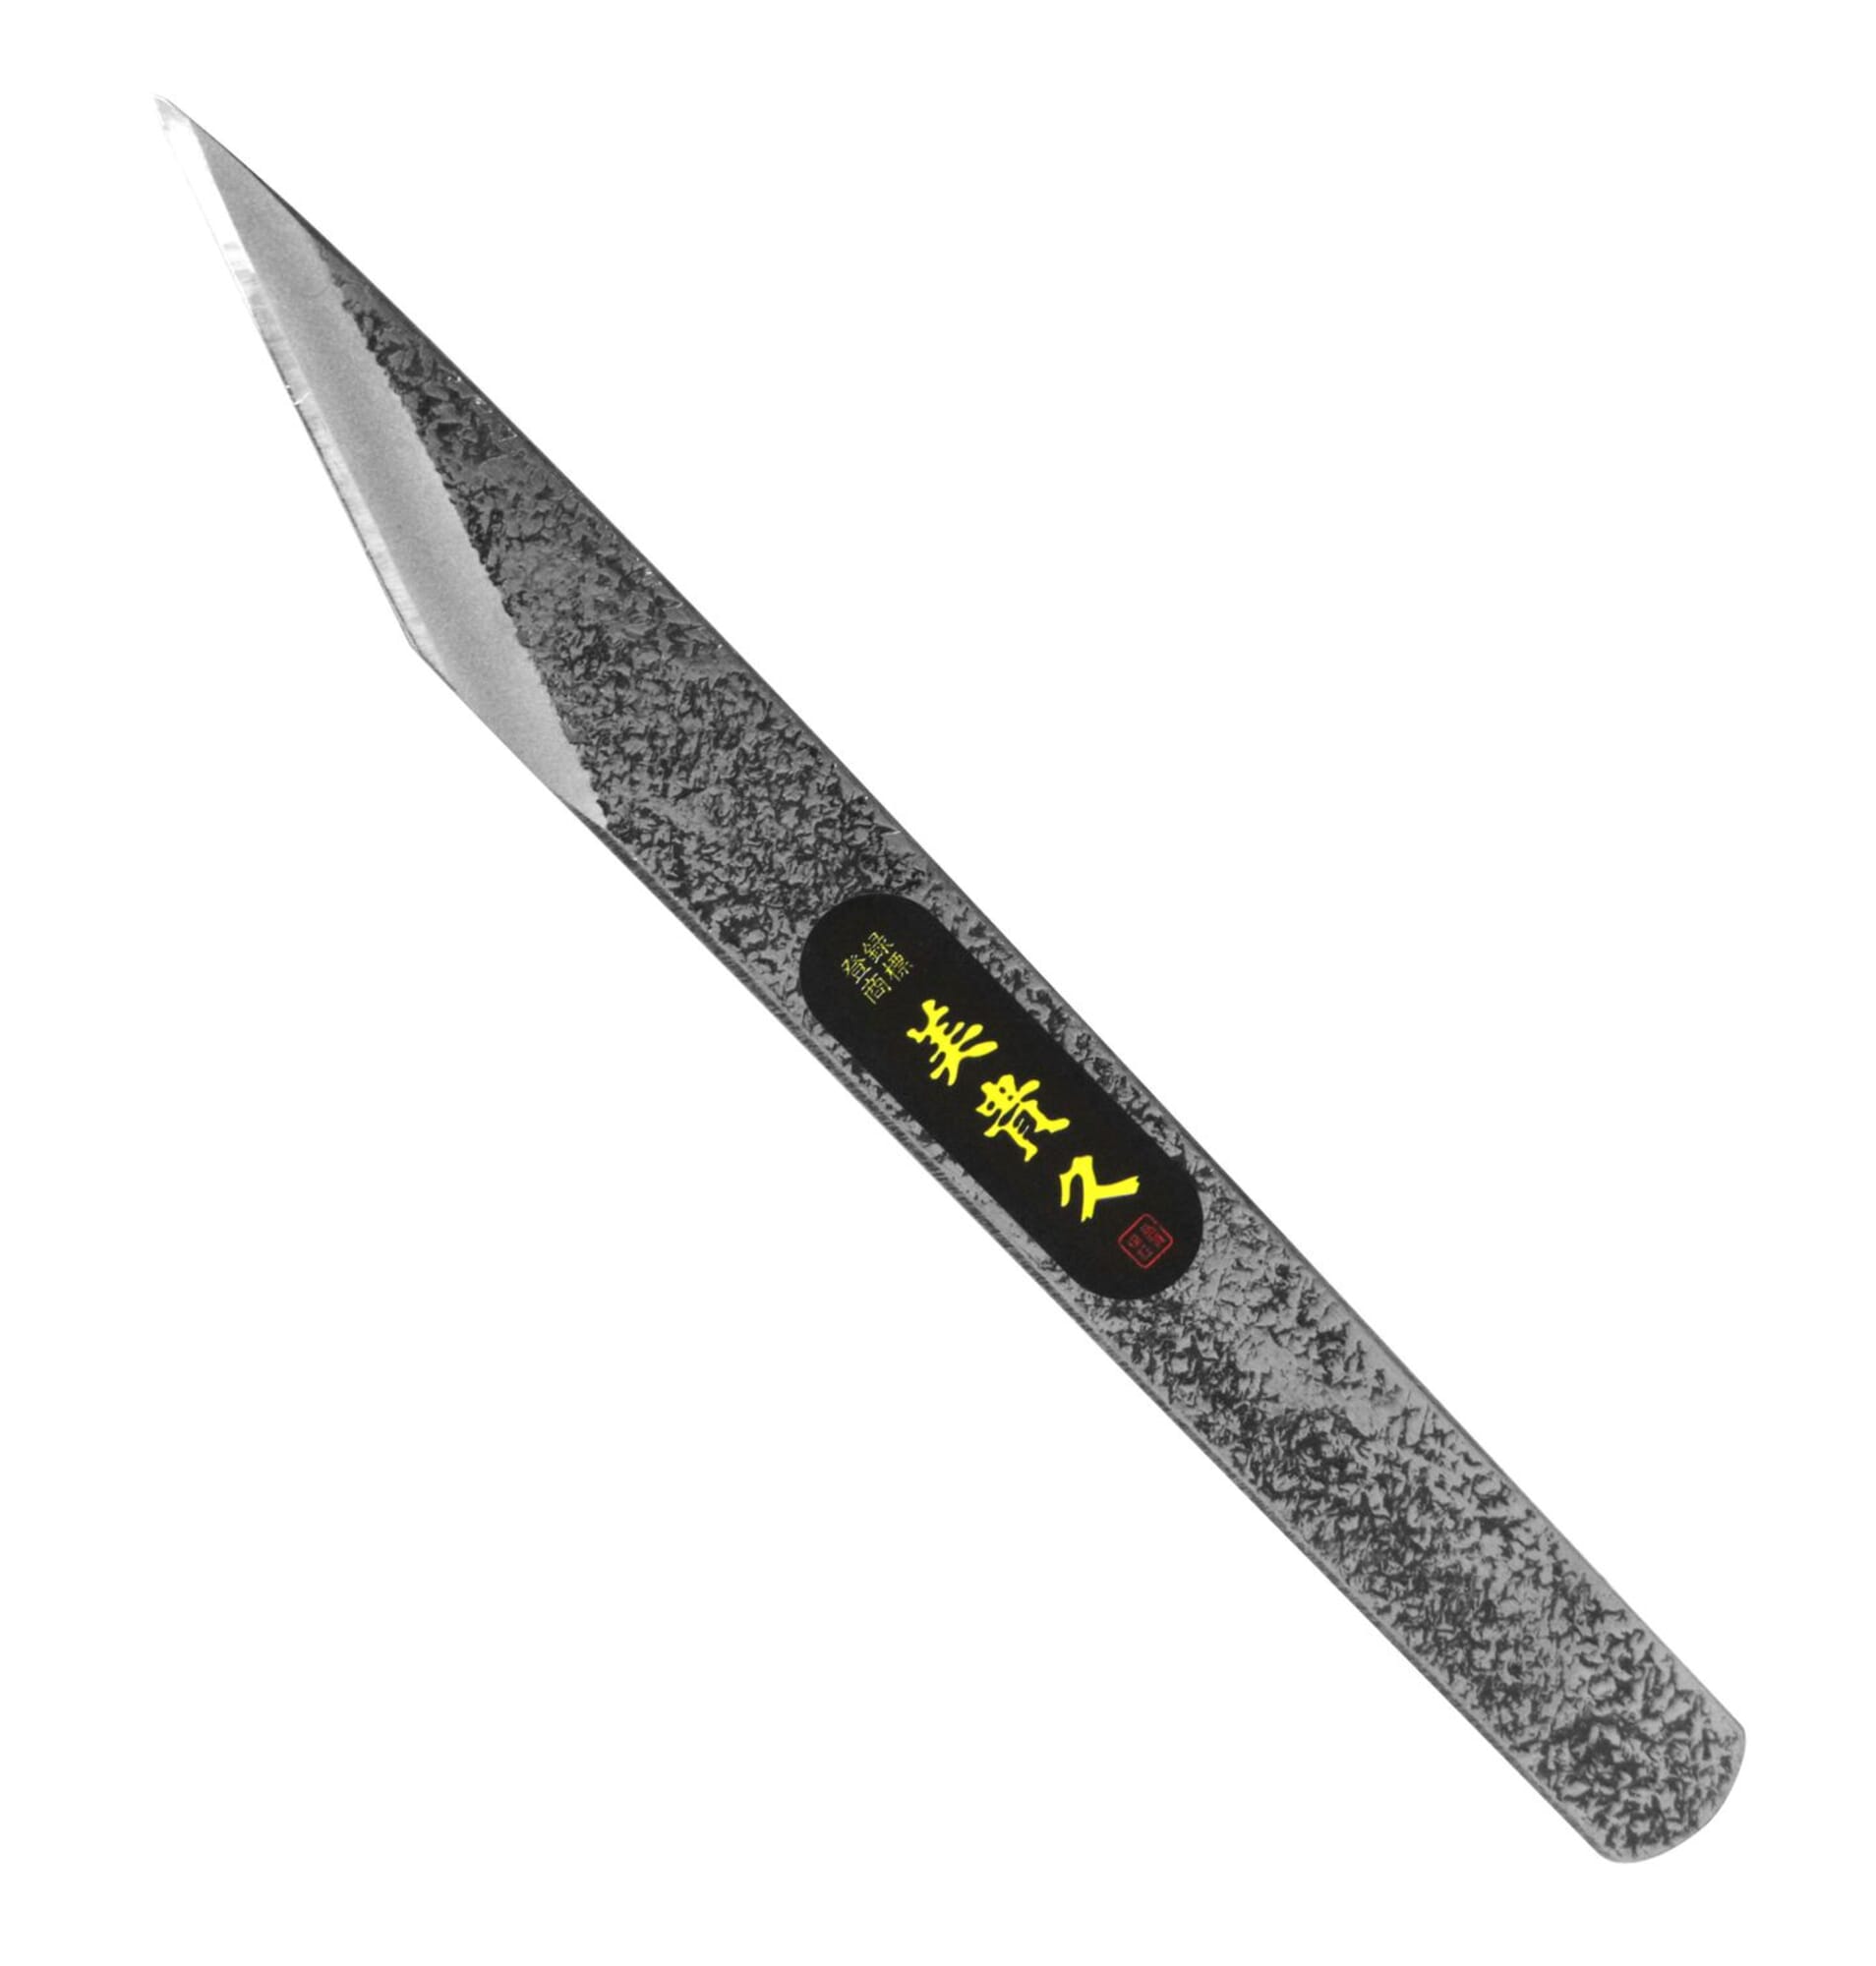 woodworking marking knife